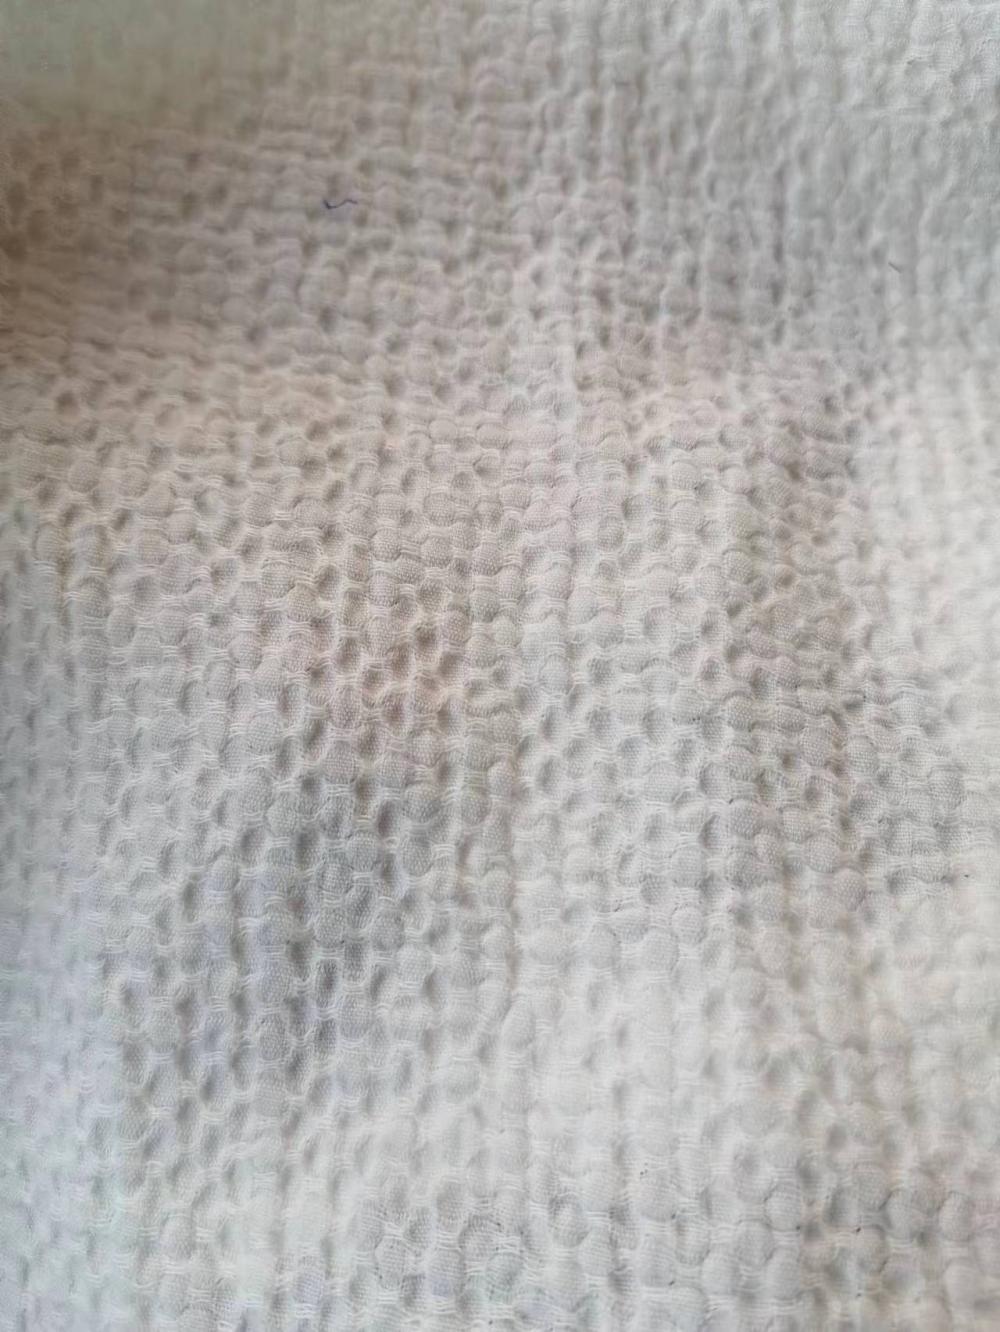 Cotton Woven Crepe Textured Fabric Jpg